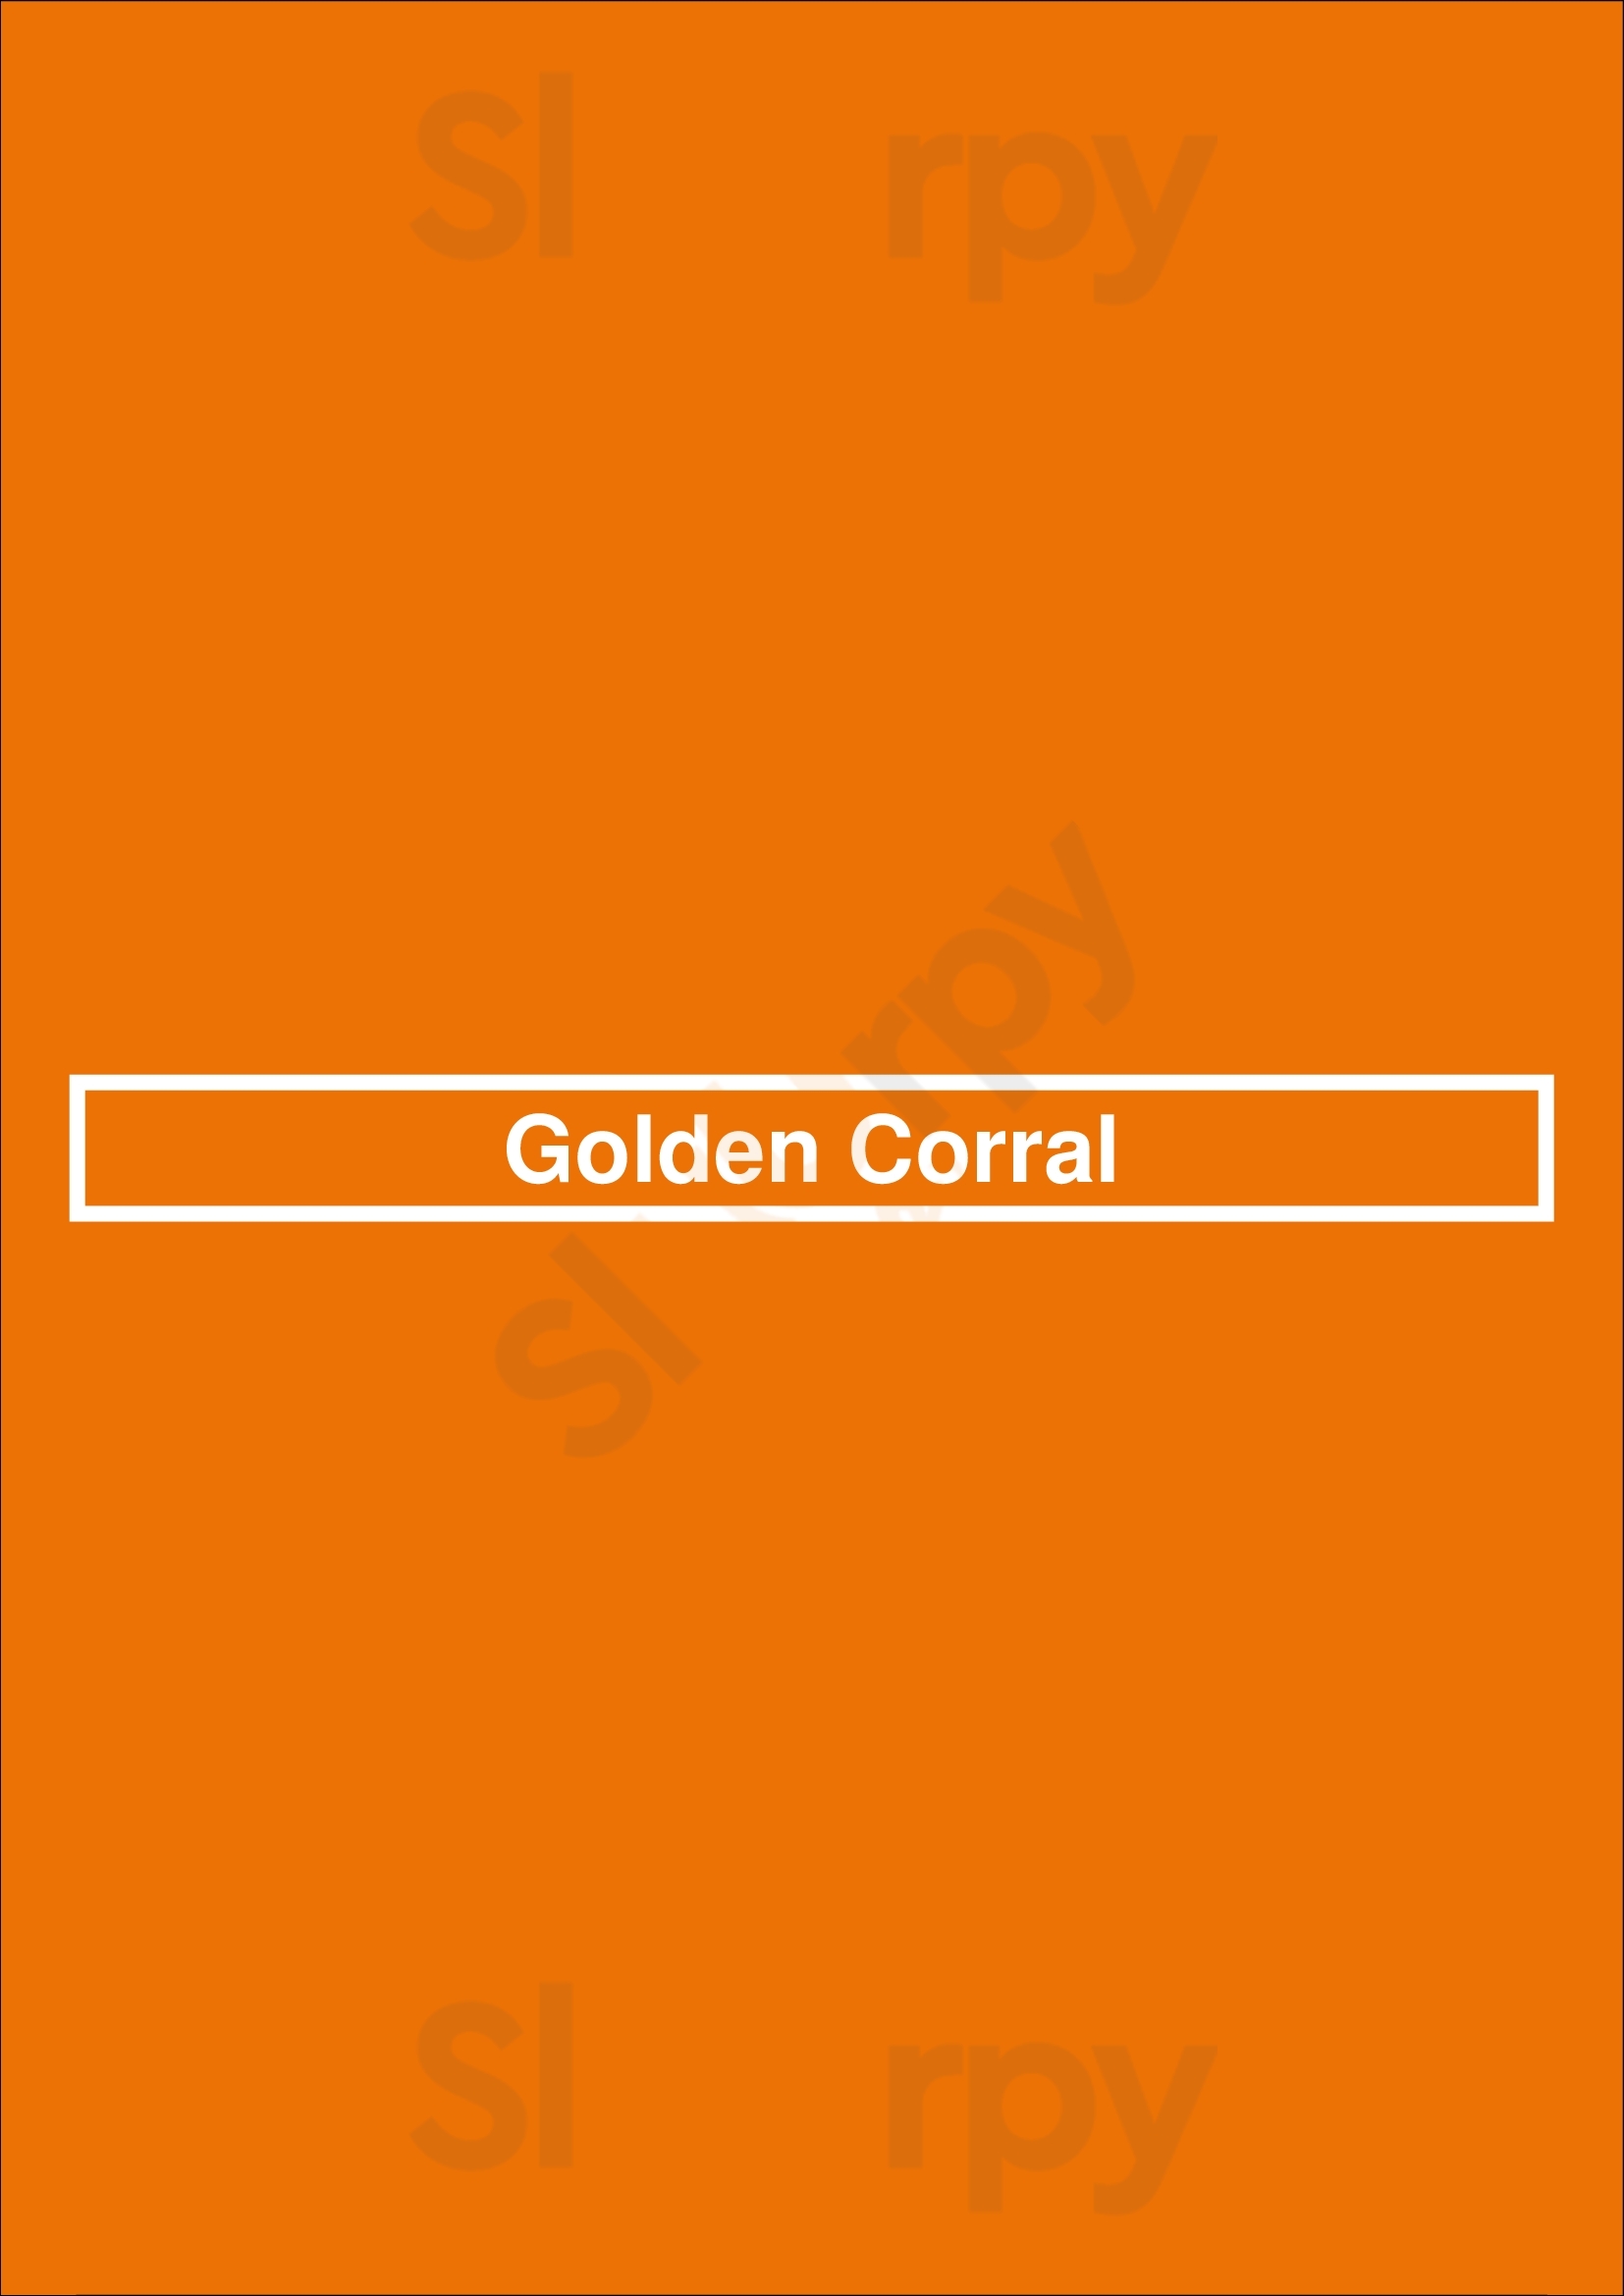 Golden Corral Cincinnati Menu - 1